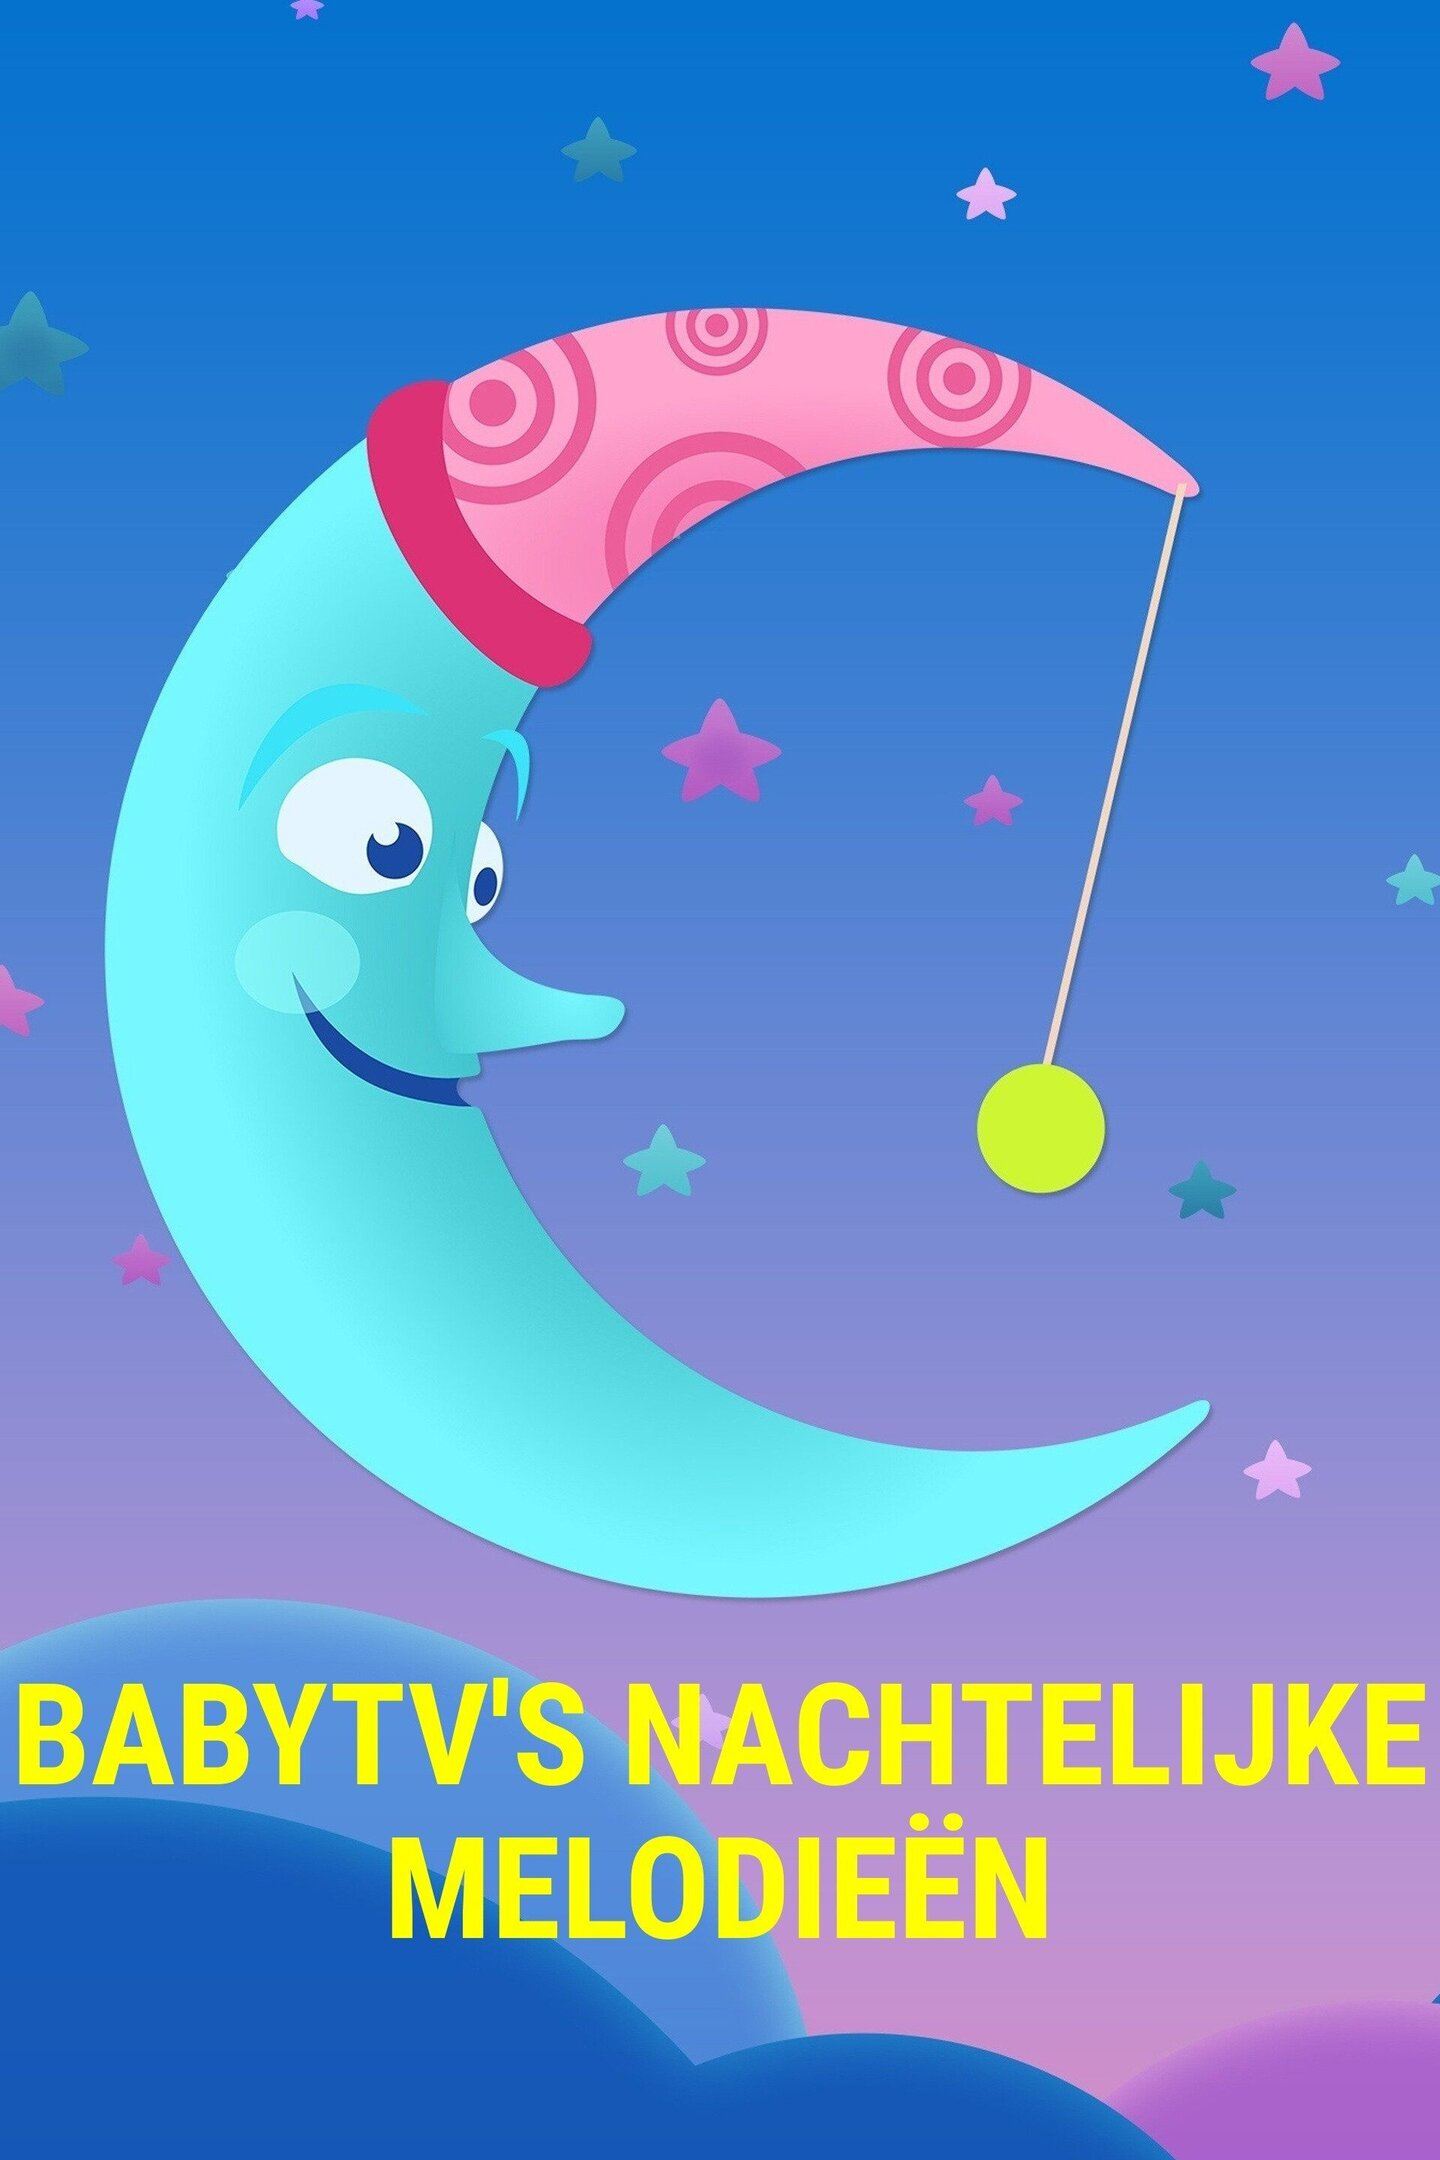 BabyTV's nachtelijke melodieën